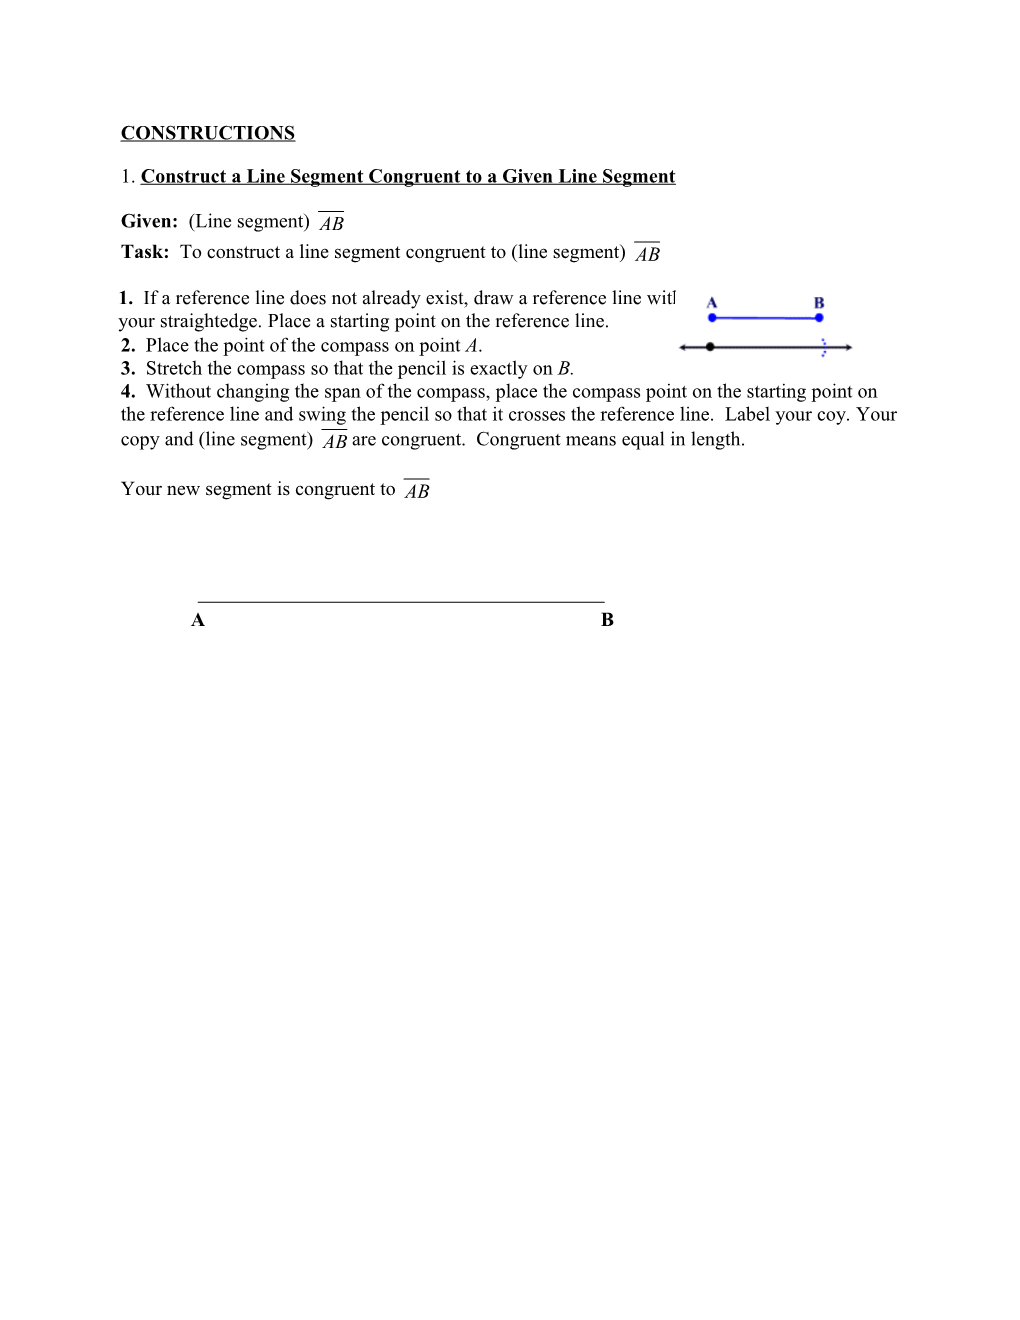 1. Construct a Line Segment Congruent to a Given Line Segment